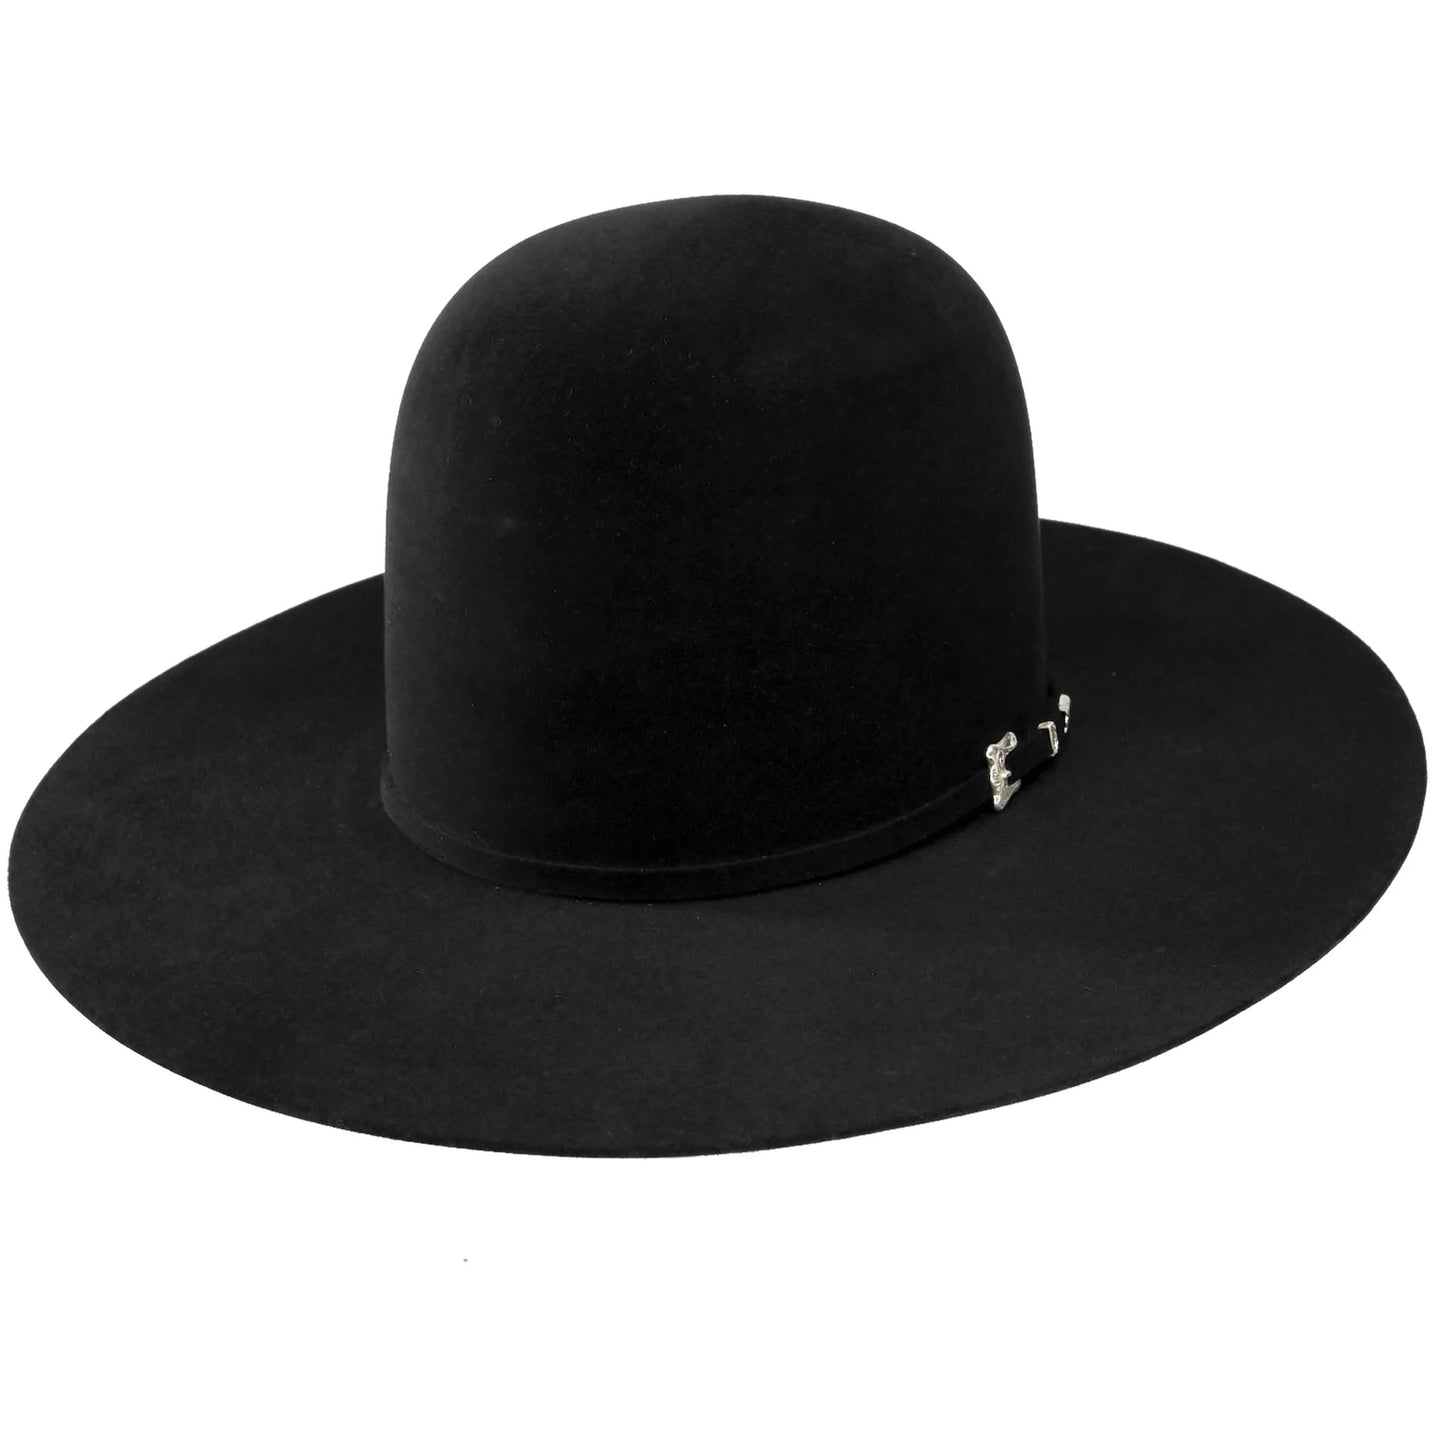 Resistol Black Gold 20X Sombrero de fieltro negro 6" Corona abierta